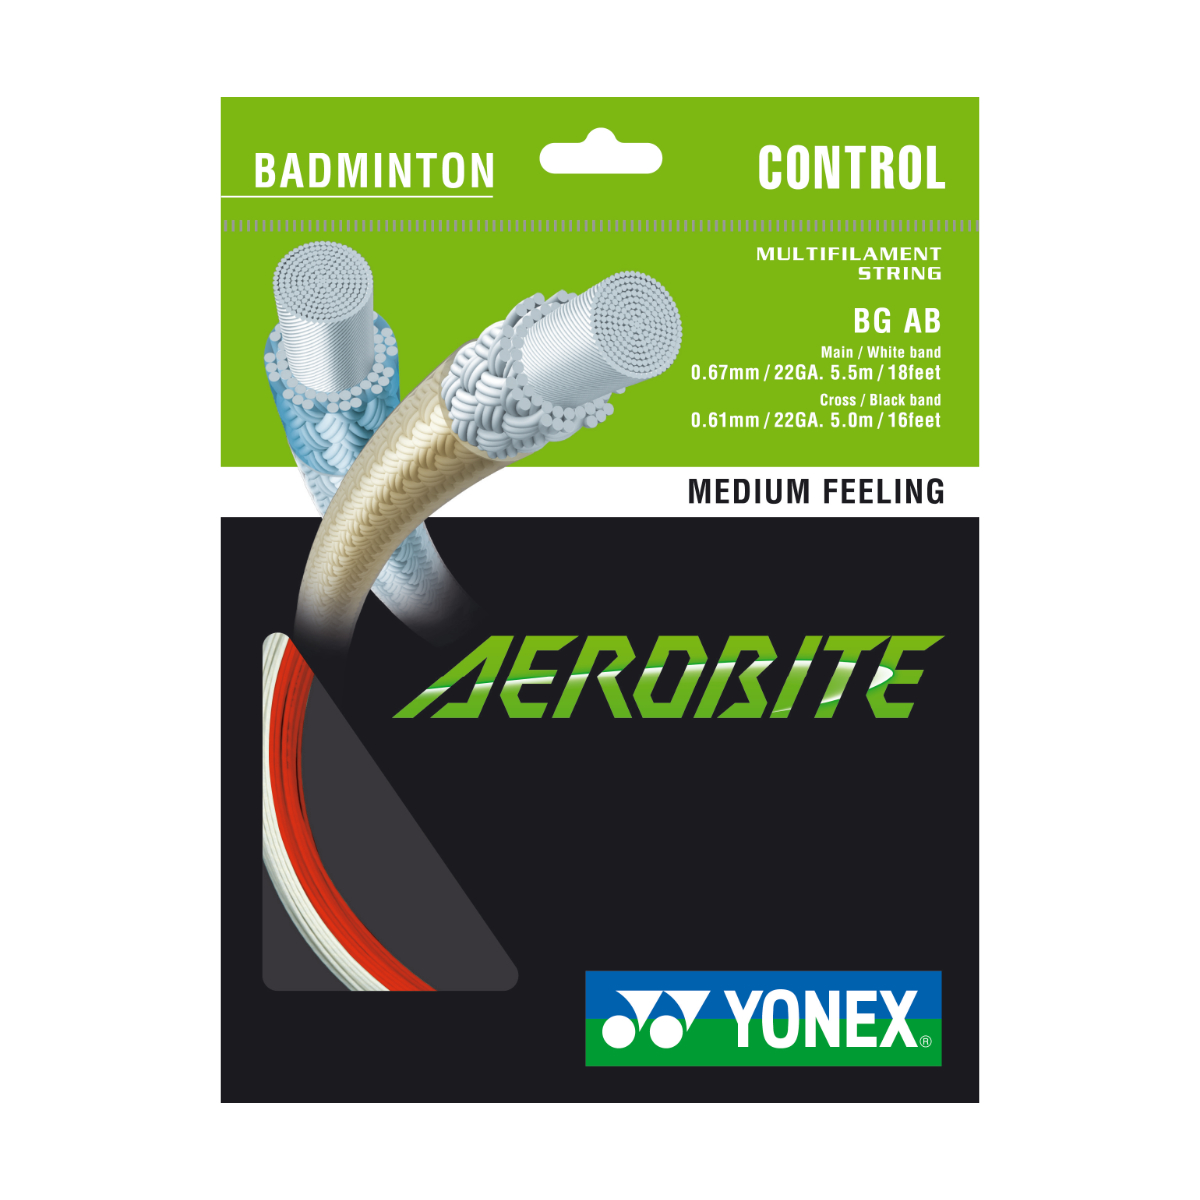 YONEX Badminton Saite - 16 BG AEROBITE SETDetailbild - 0